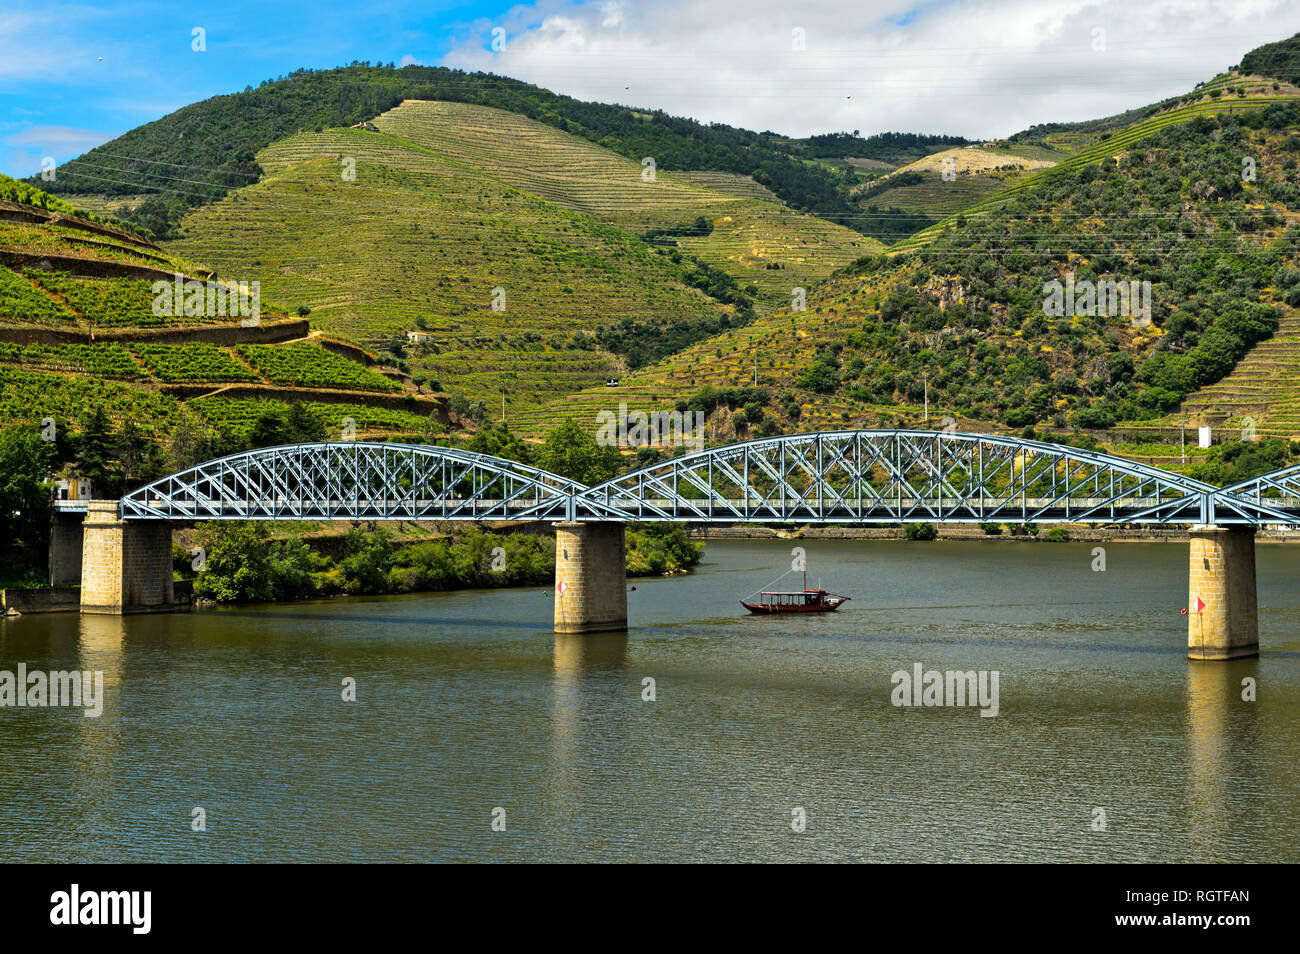 Iron road bridge over the Douro River, Pinhao, Douro Valley, Portugal Stock Photo